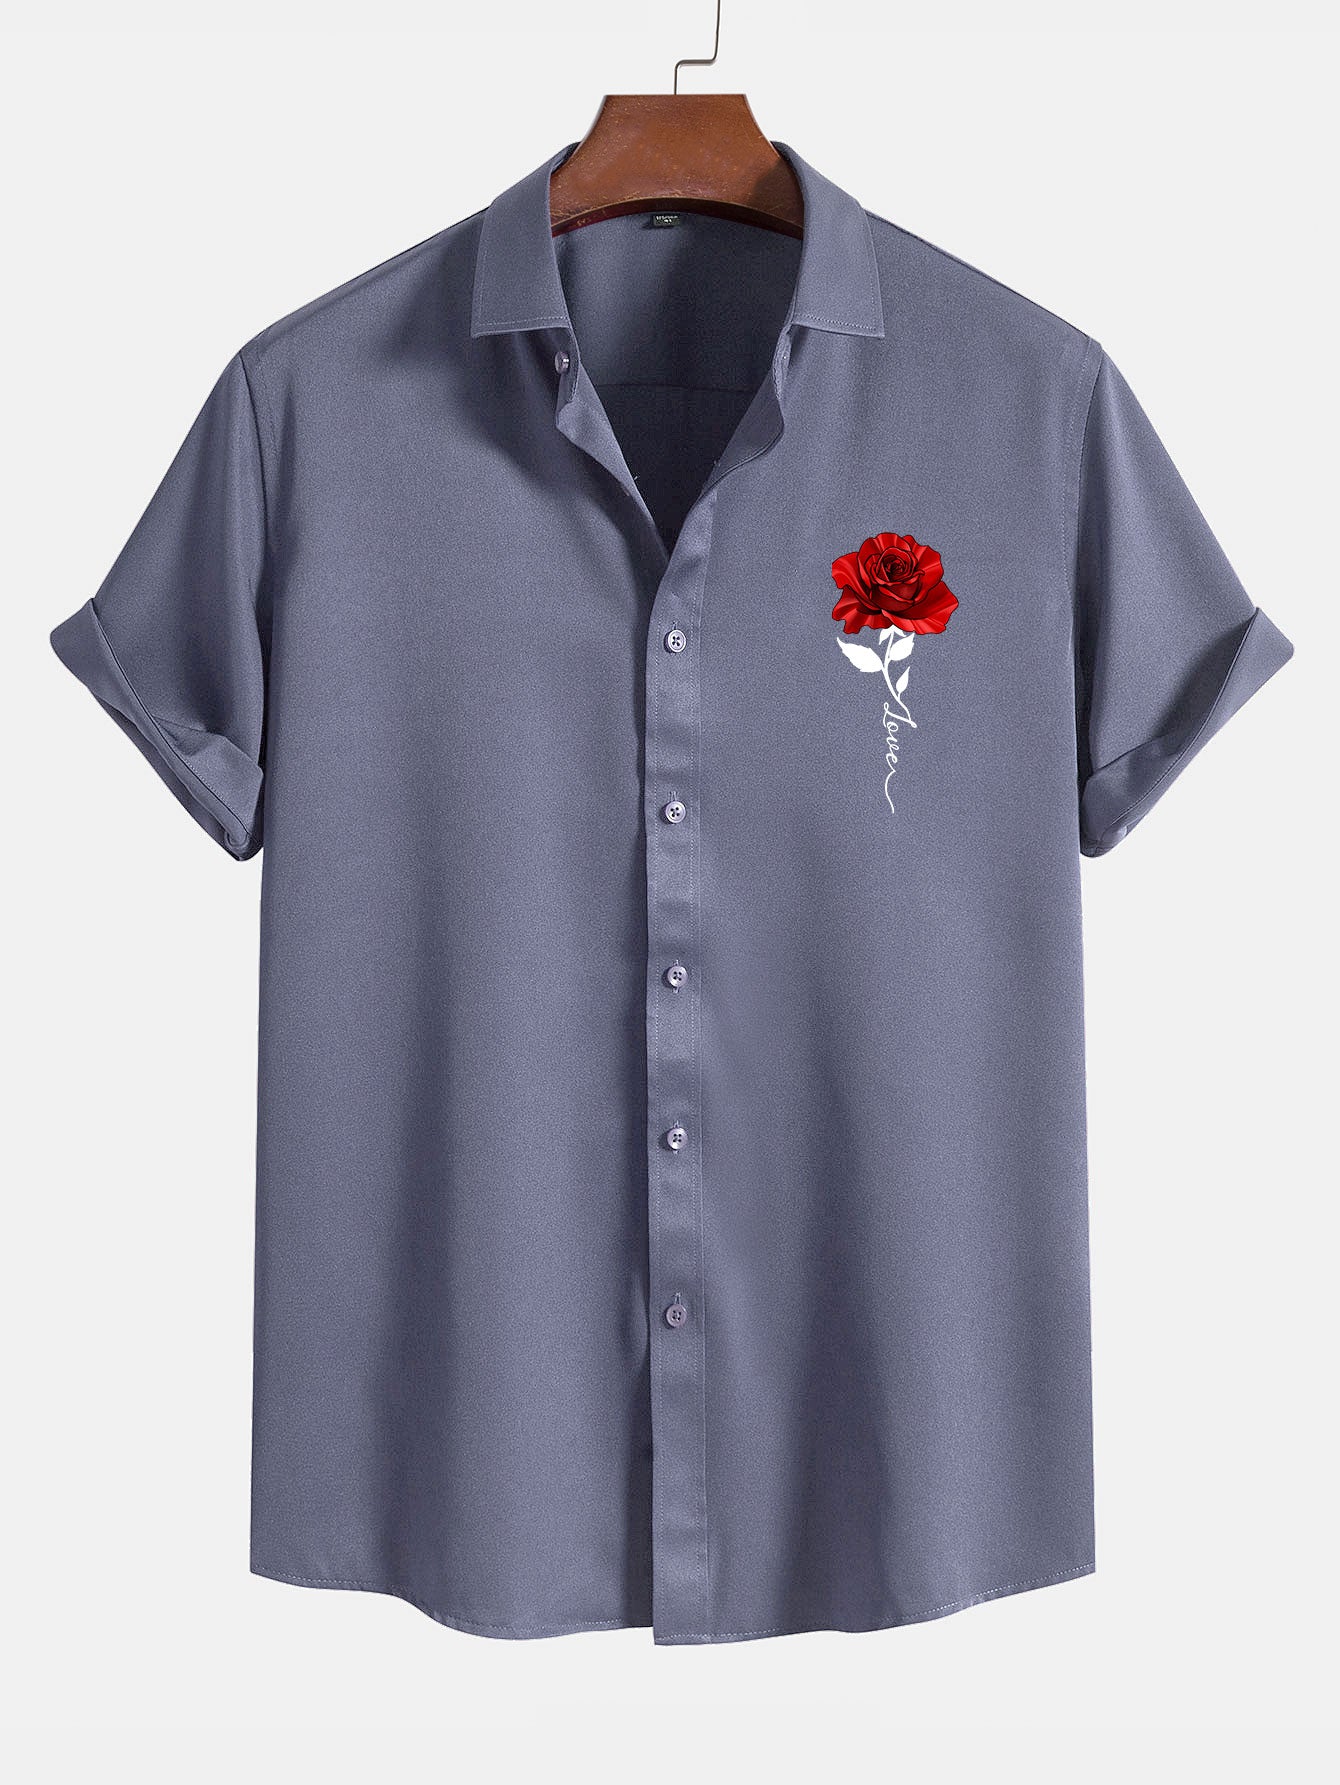 Rose Print Button Up Shirt